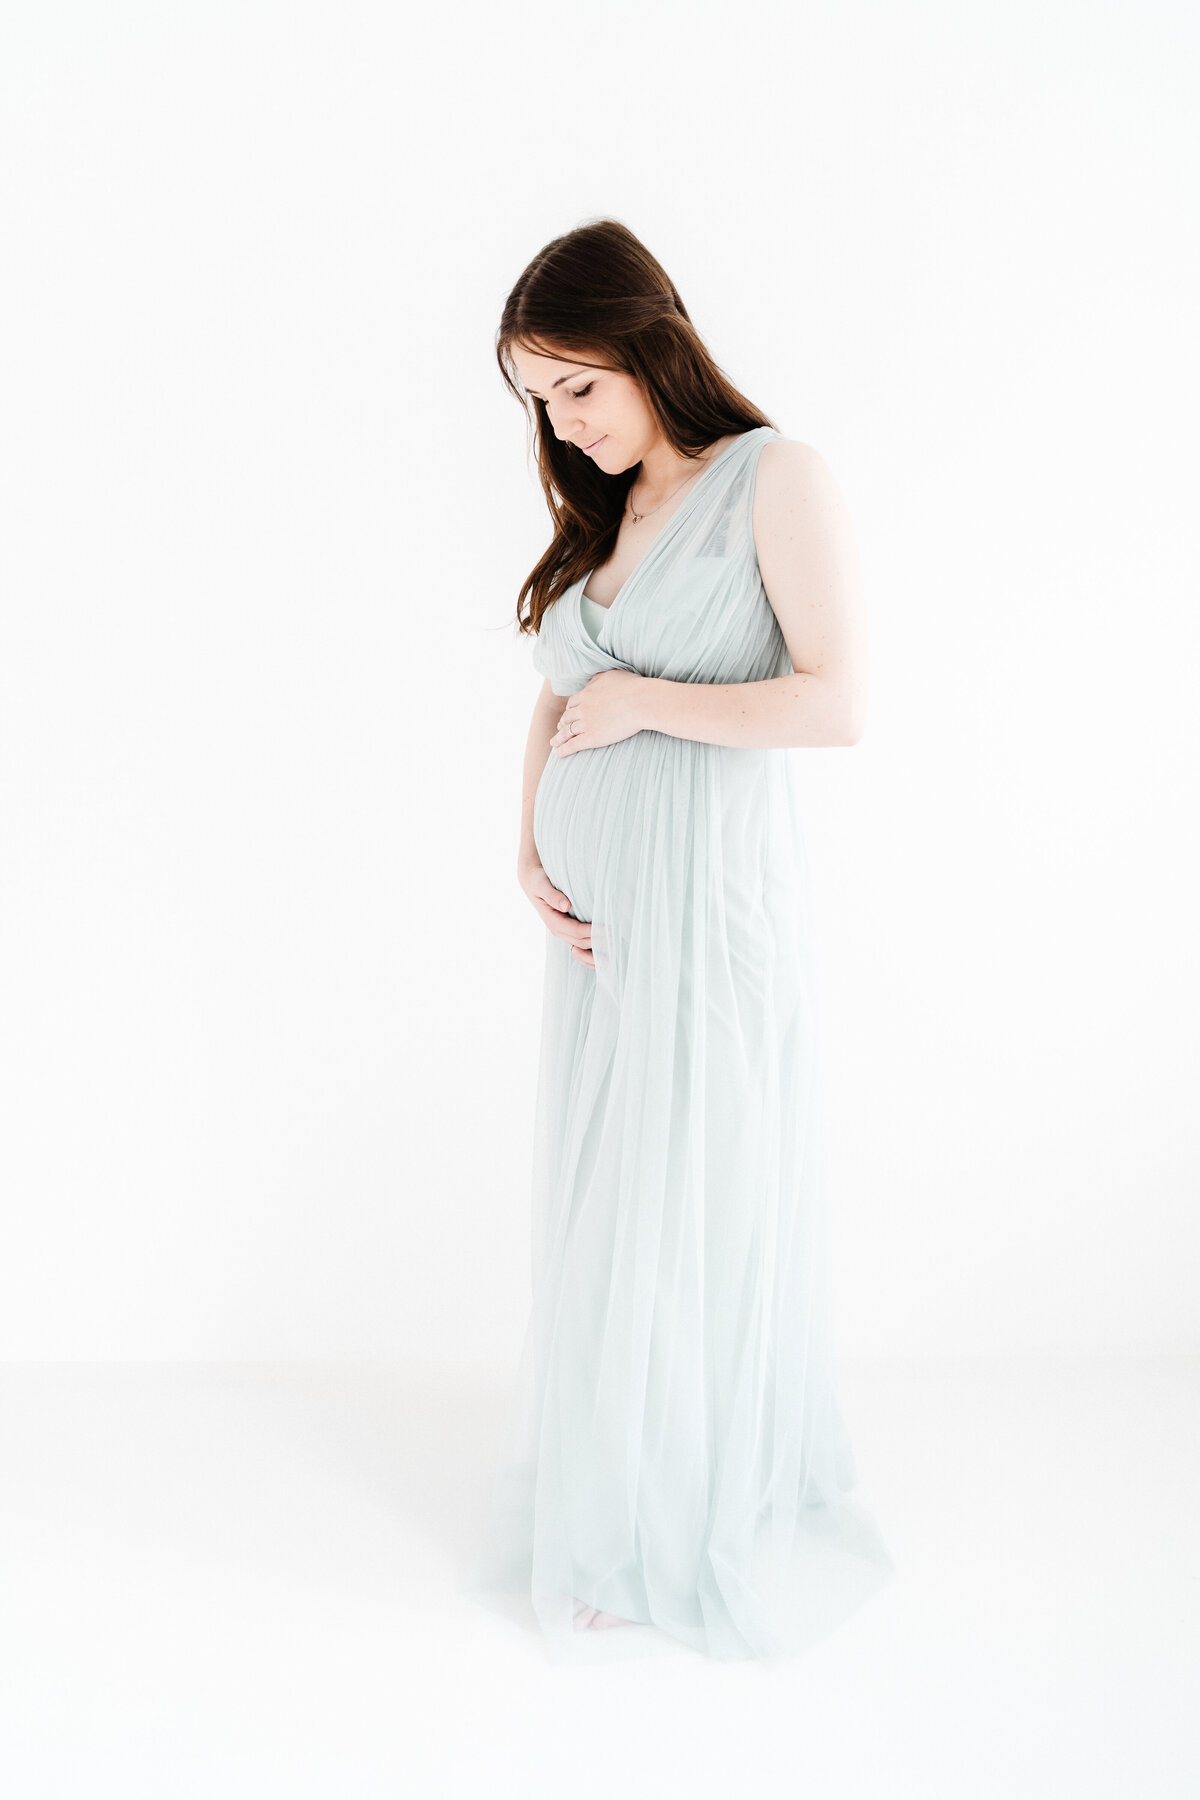 NicoleAthena-Maternity-2